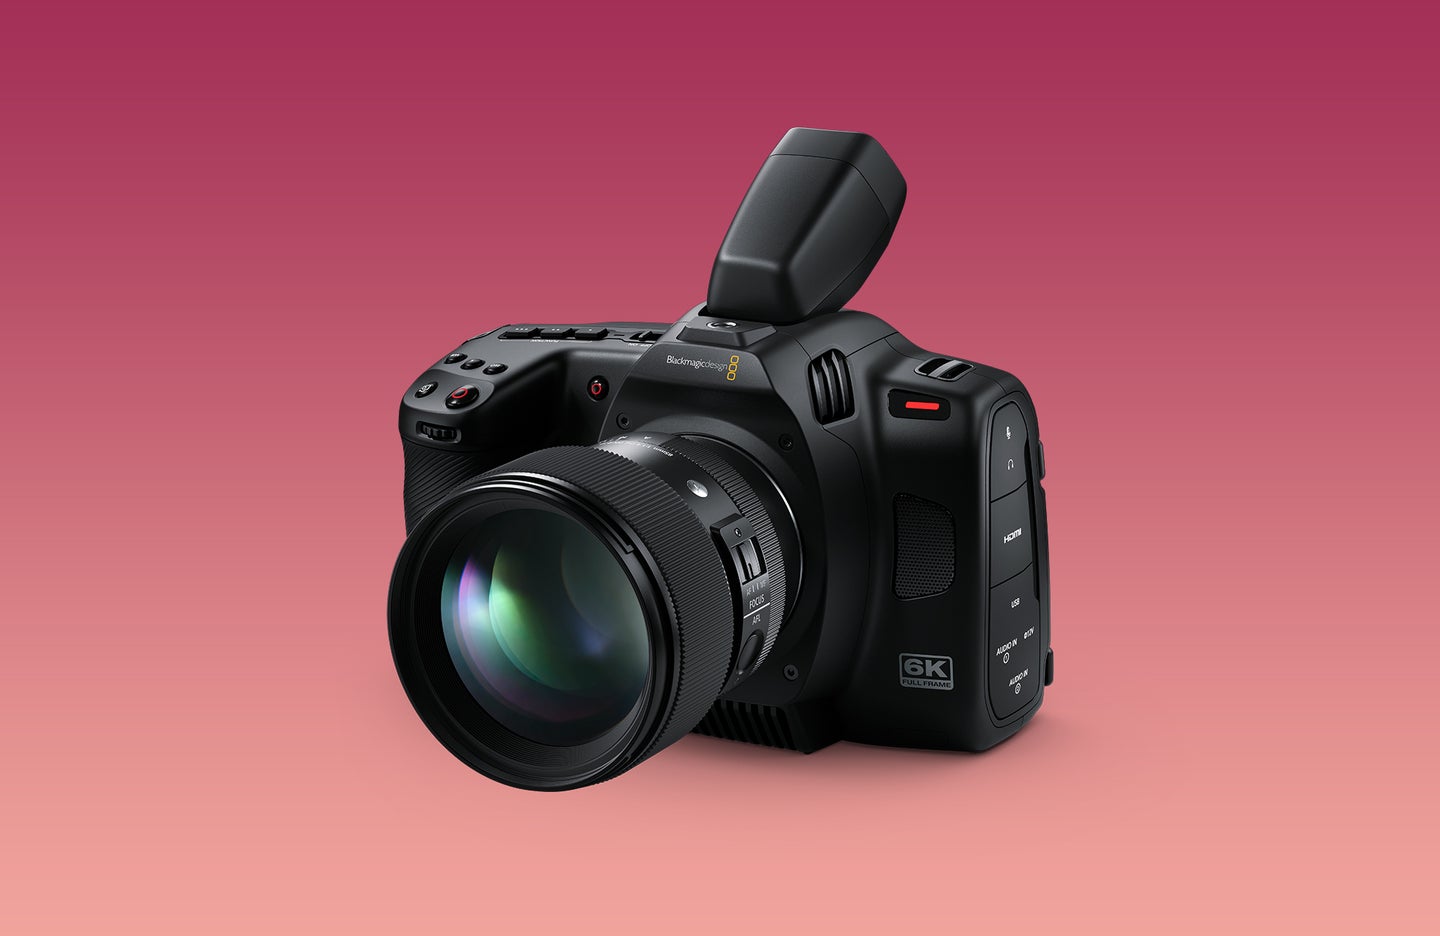 Blackmagic Cinema Camera 6K against a background fading rom light peach to dark pink